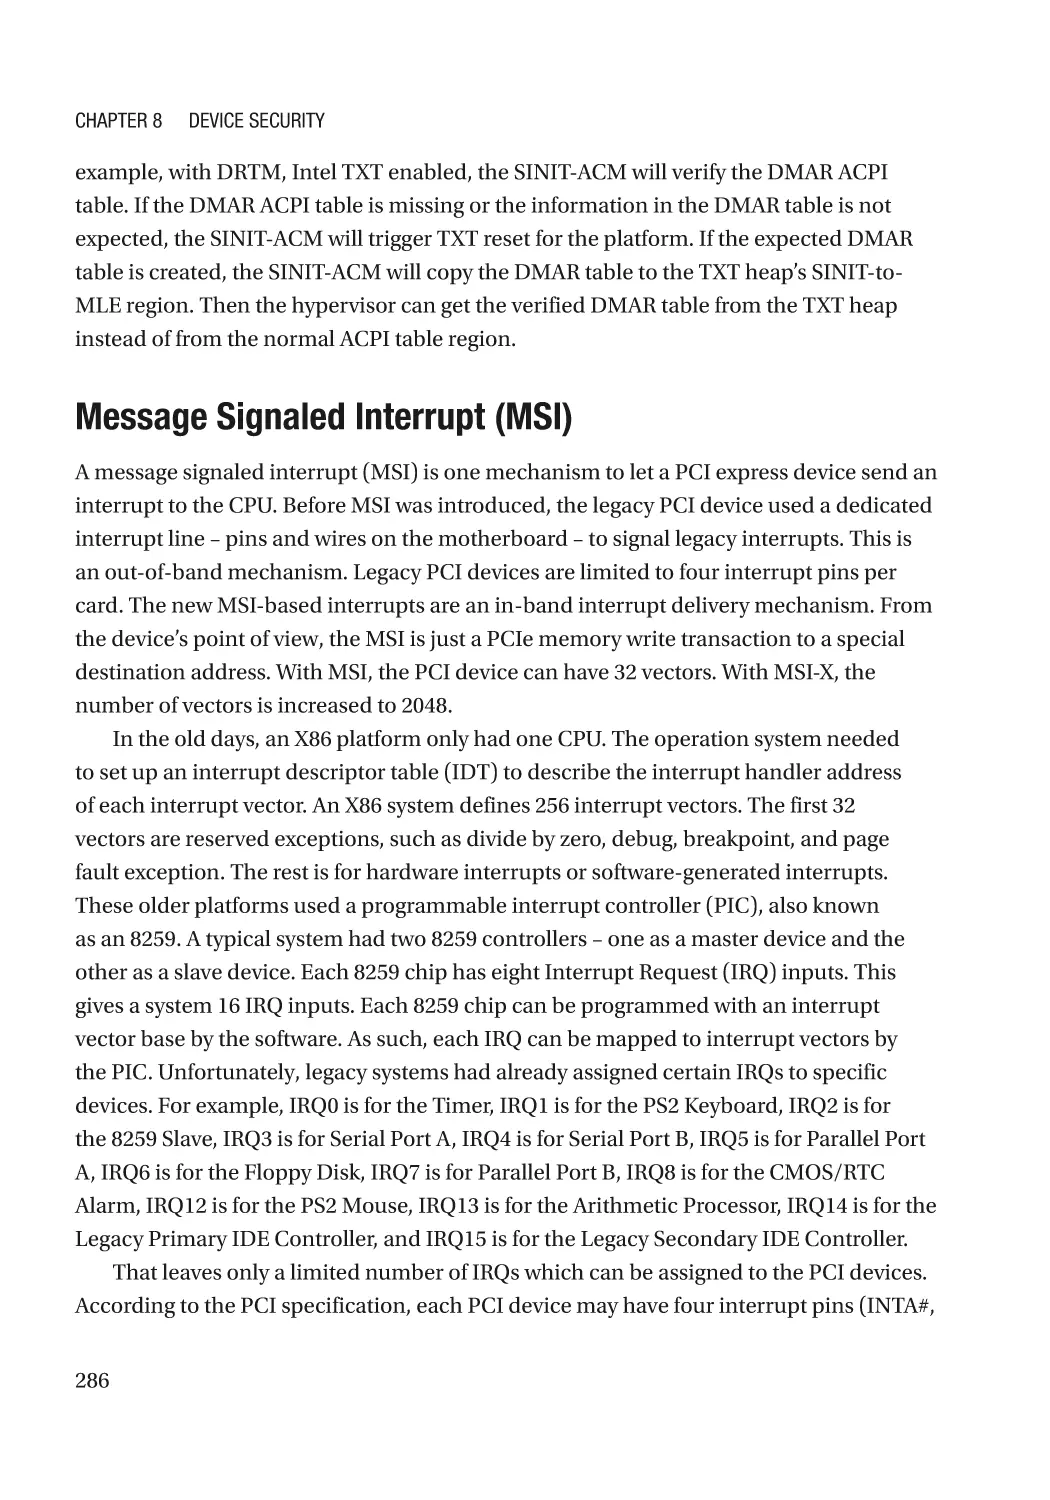 Message Signaled Interrupt (MSI)